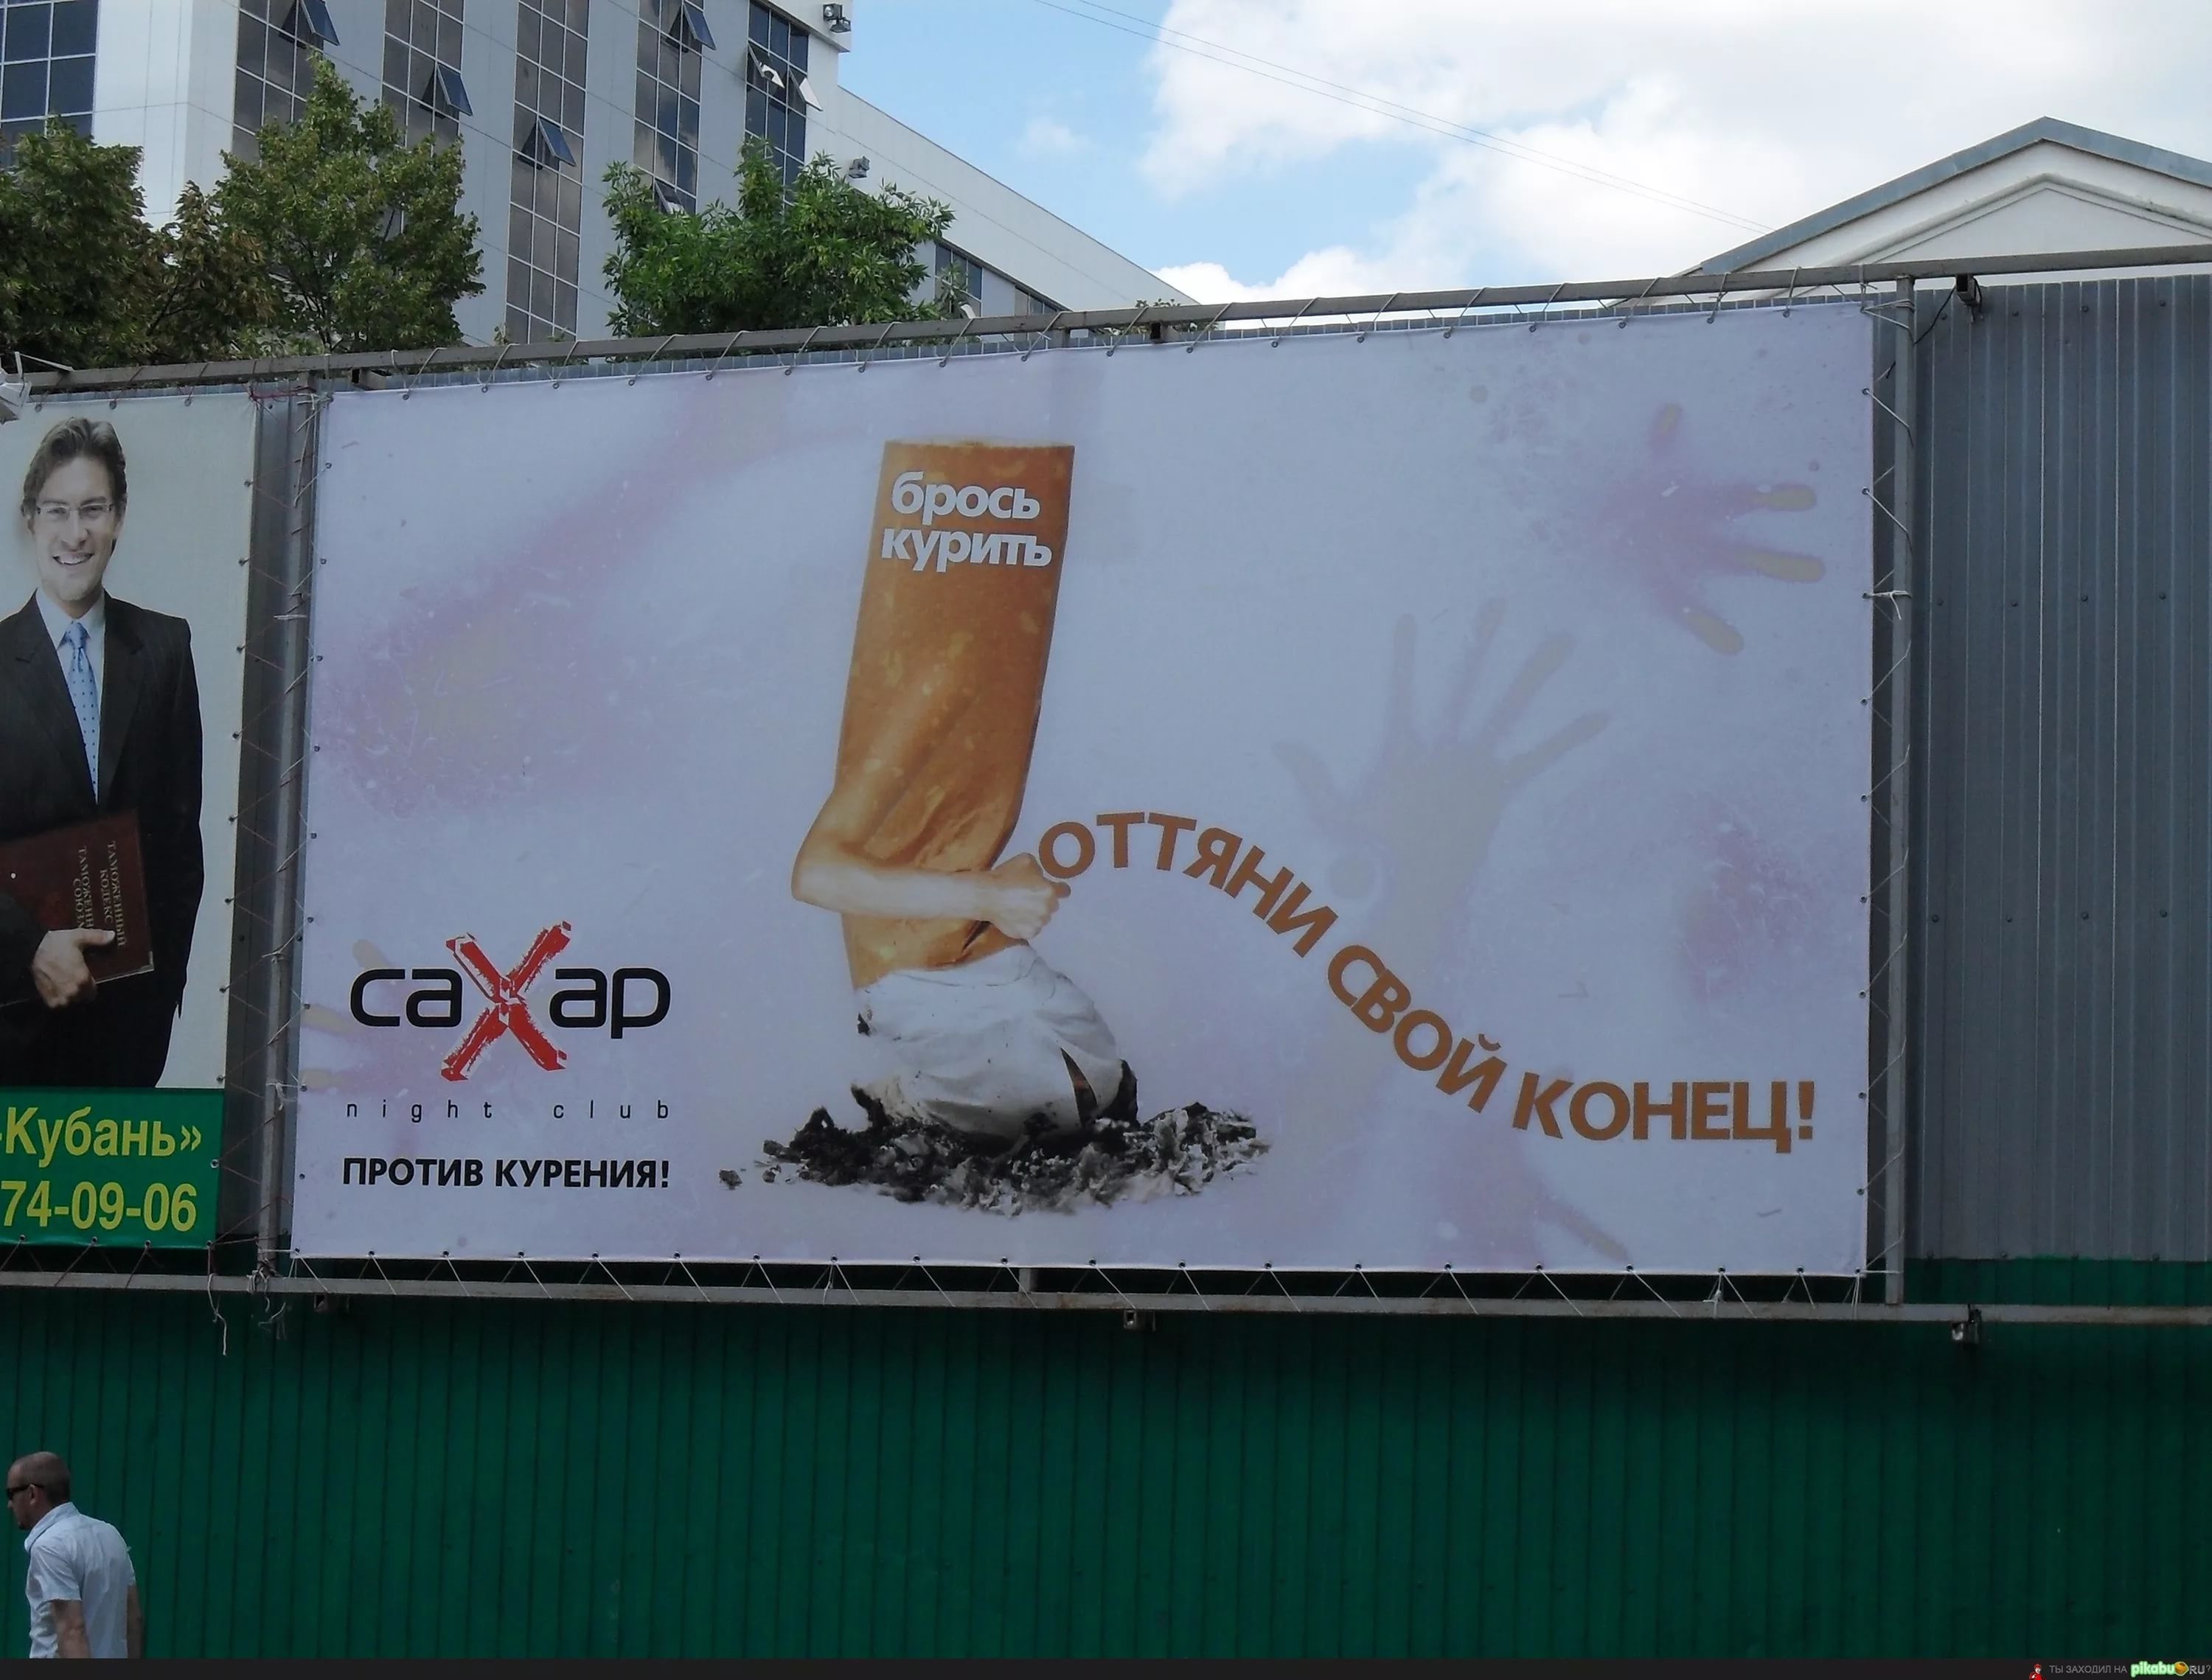 Реклама про россию. Слоганы для рекламы. Реклама примеры. Примеры плохой рекламы. Слоган на баннере.